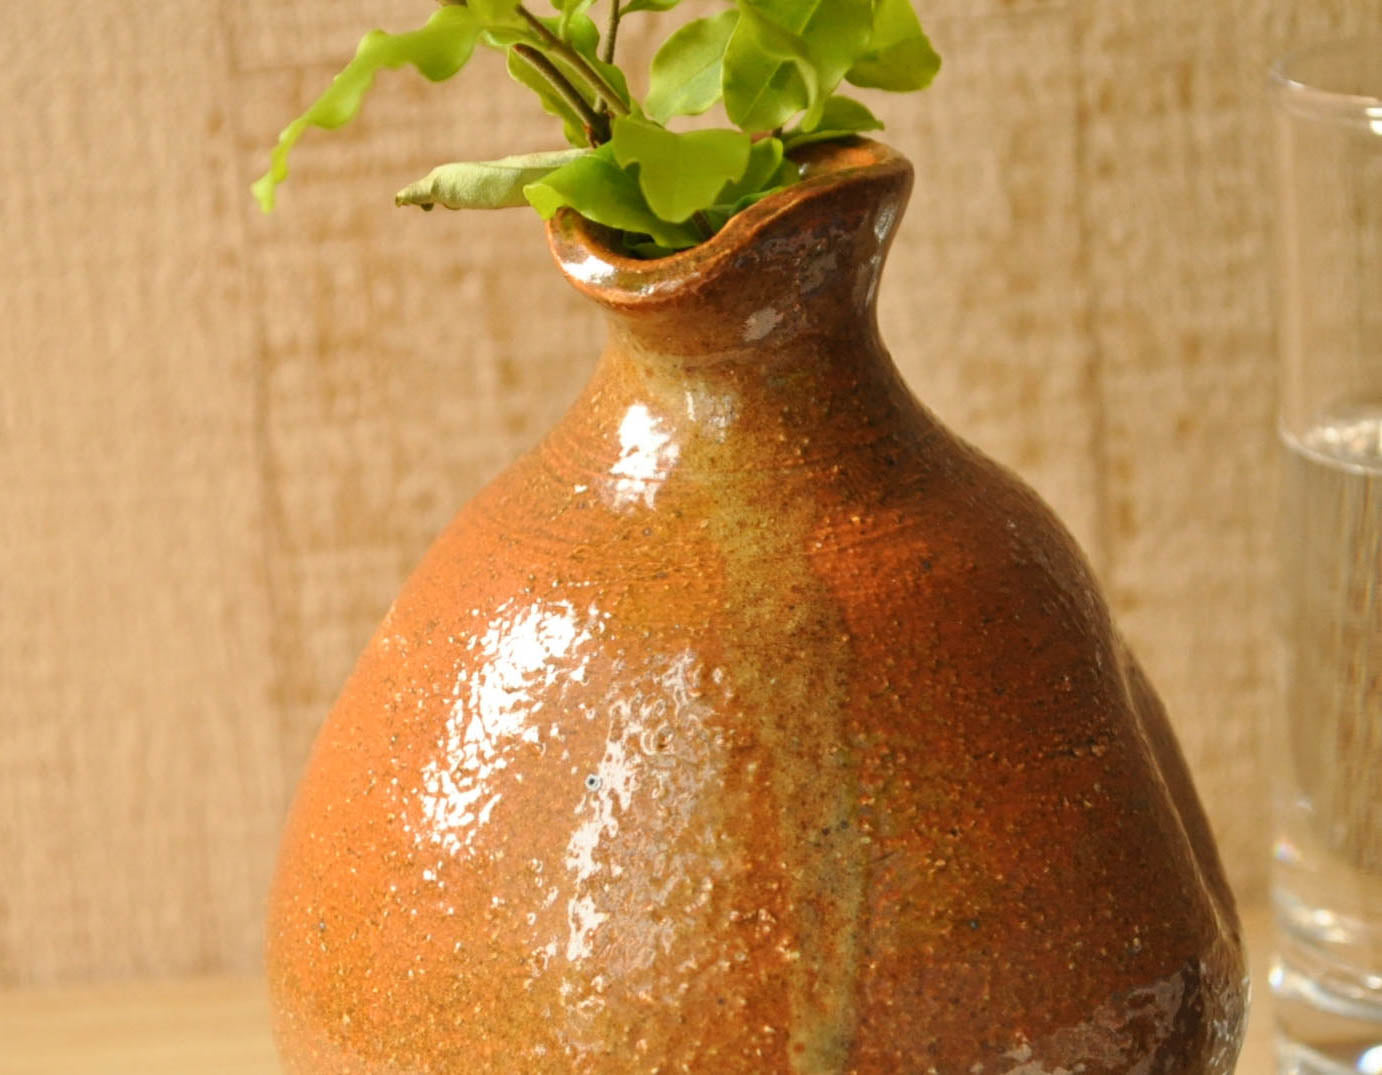 Little vase 7